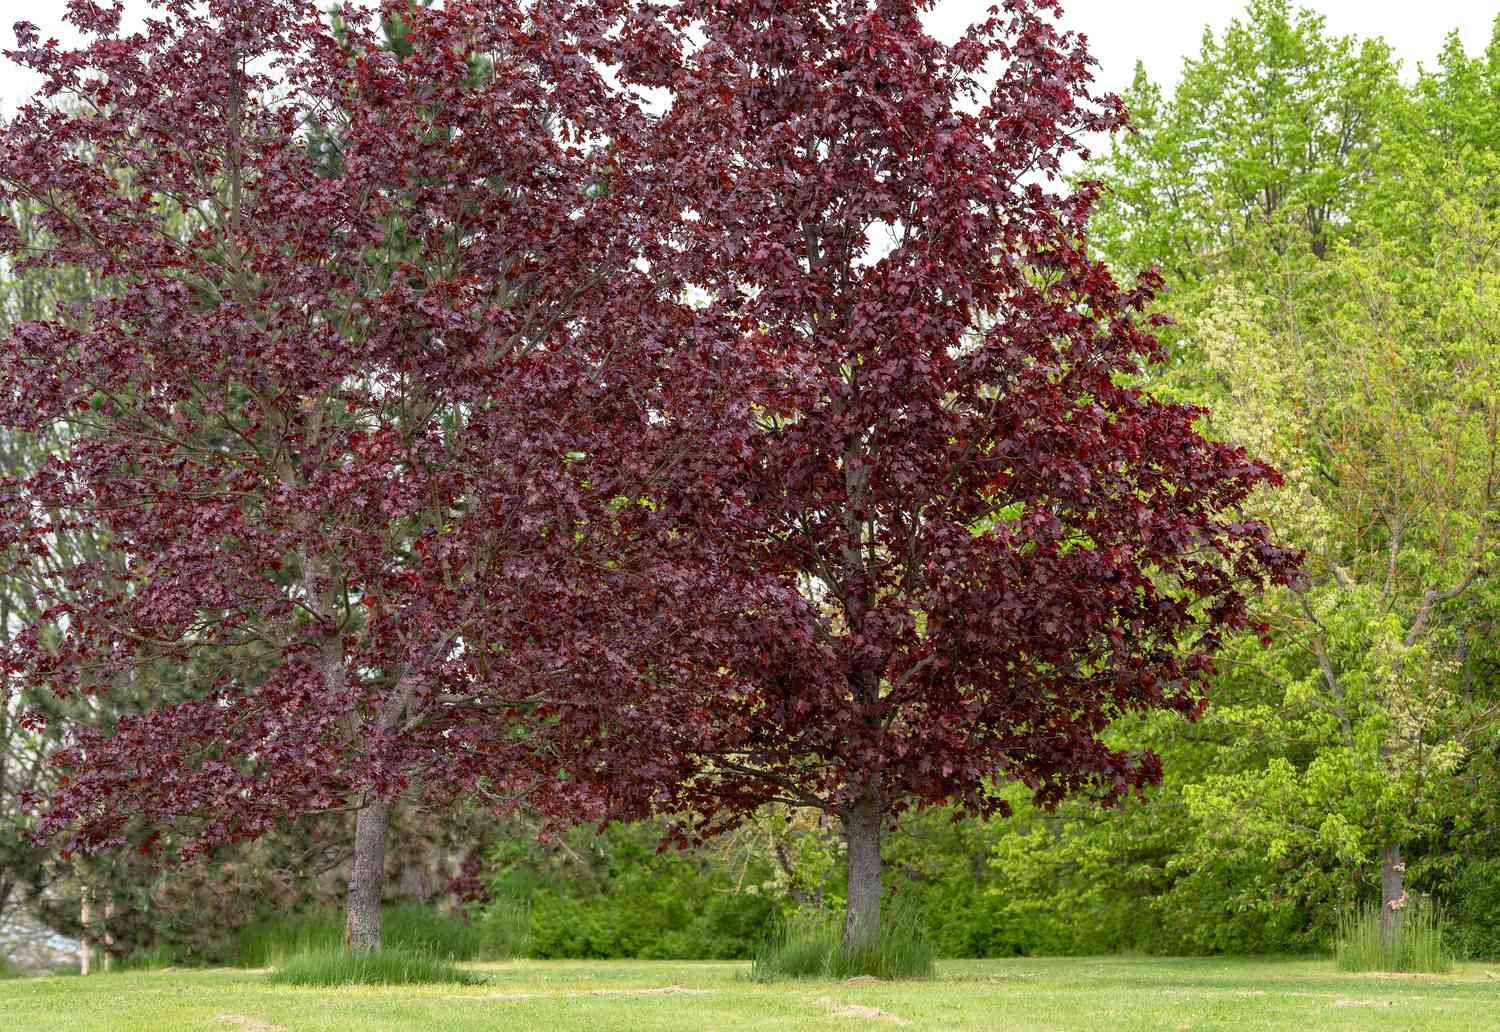 Acer platanoides 'Crimson Sentry' Ahornbäume mit violetten Blättern